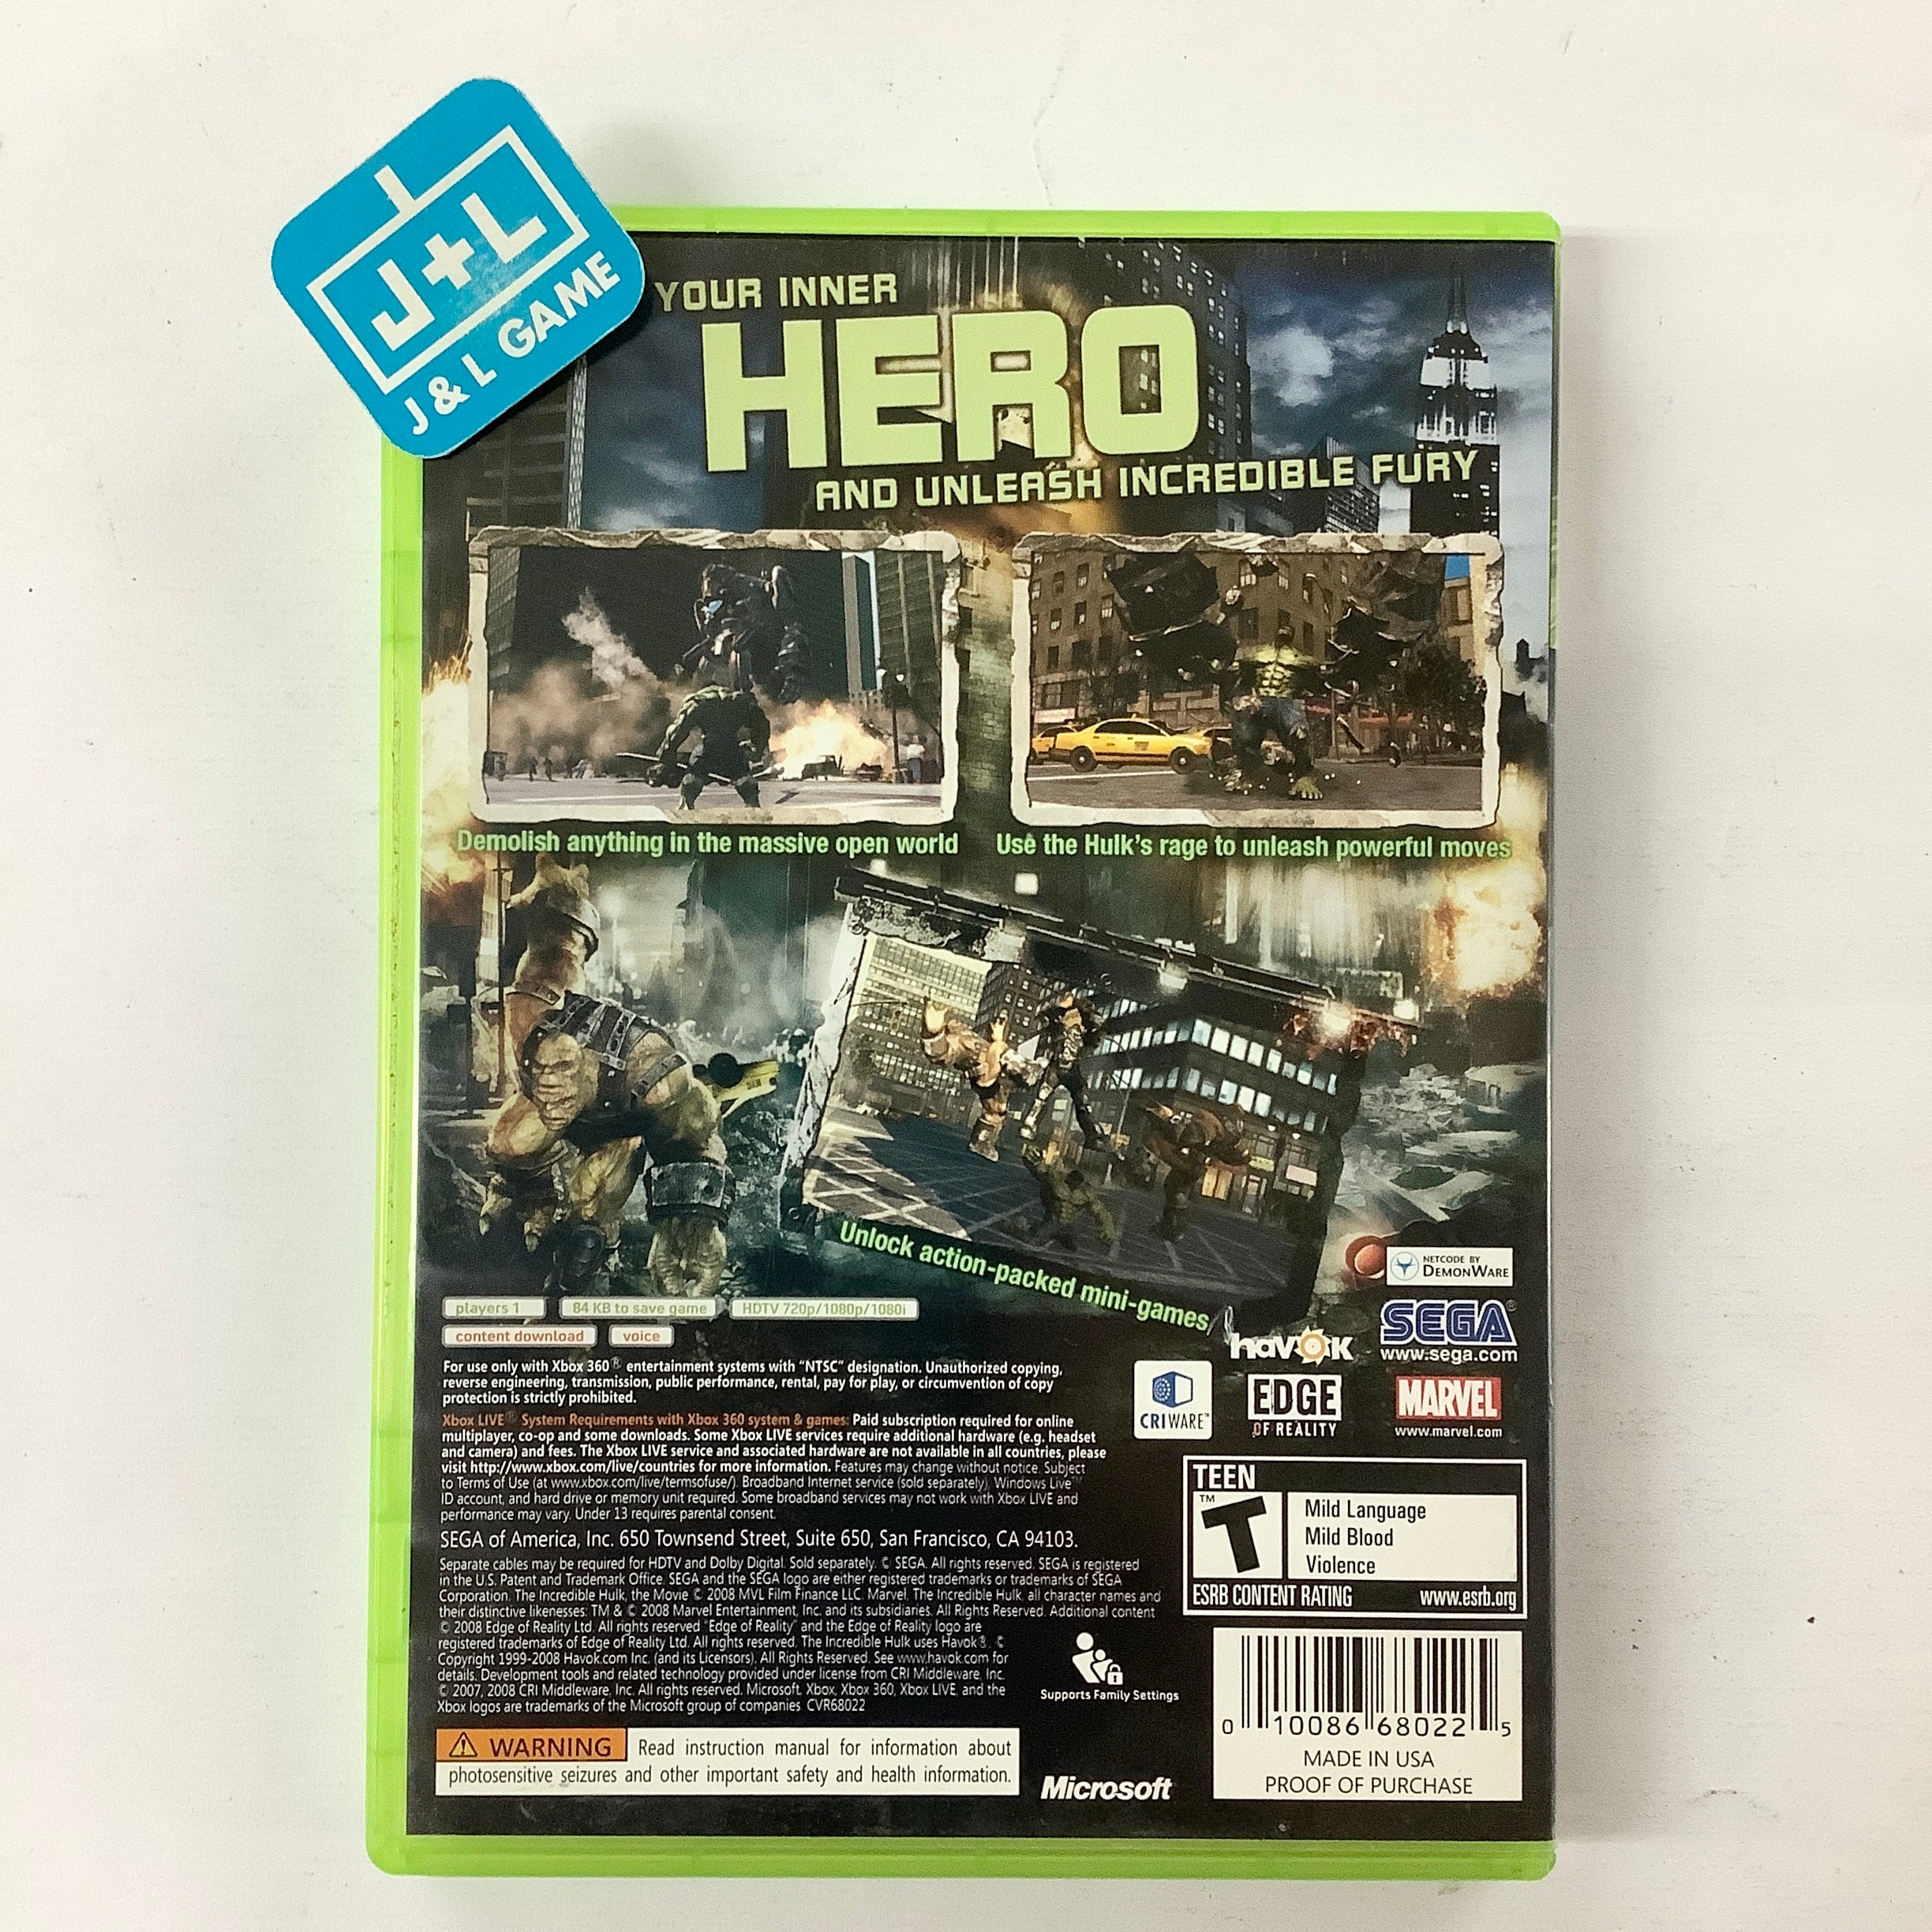 The Incredible Hulk - Xbox 360 [Pre-Owned] Video Games Sega   